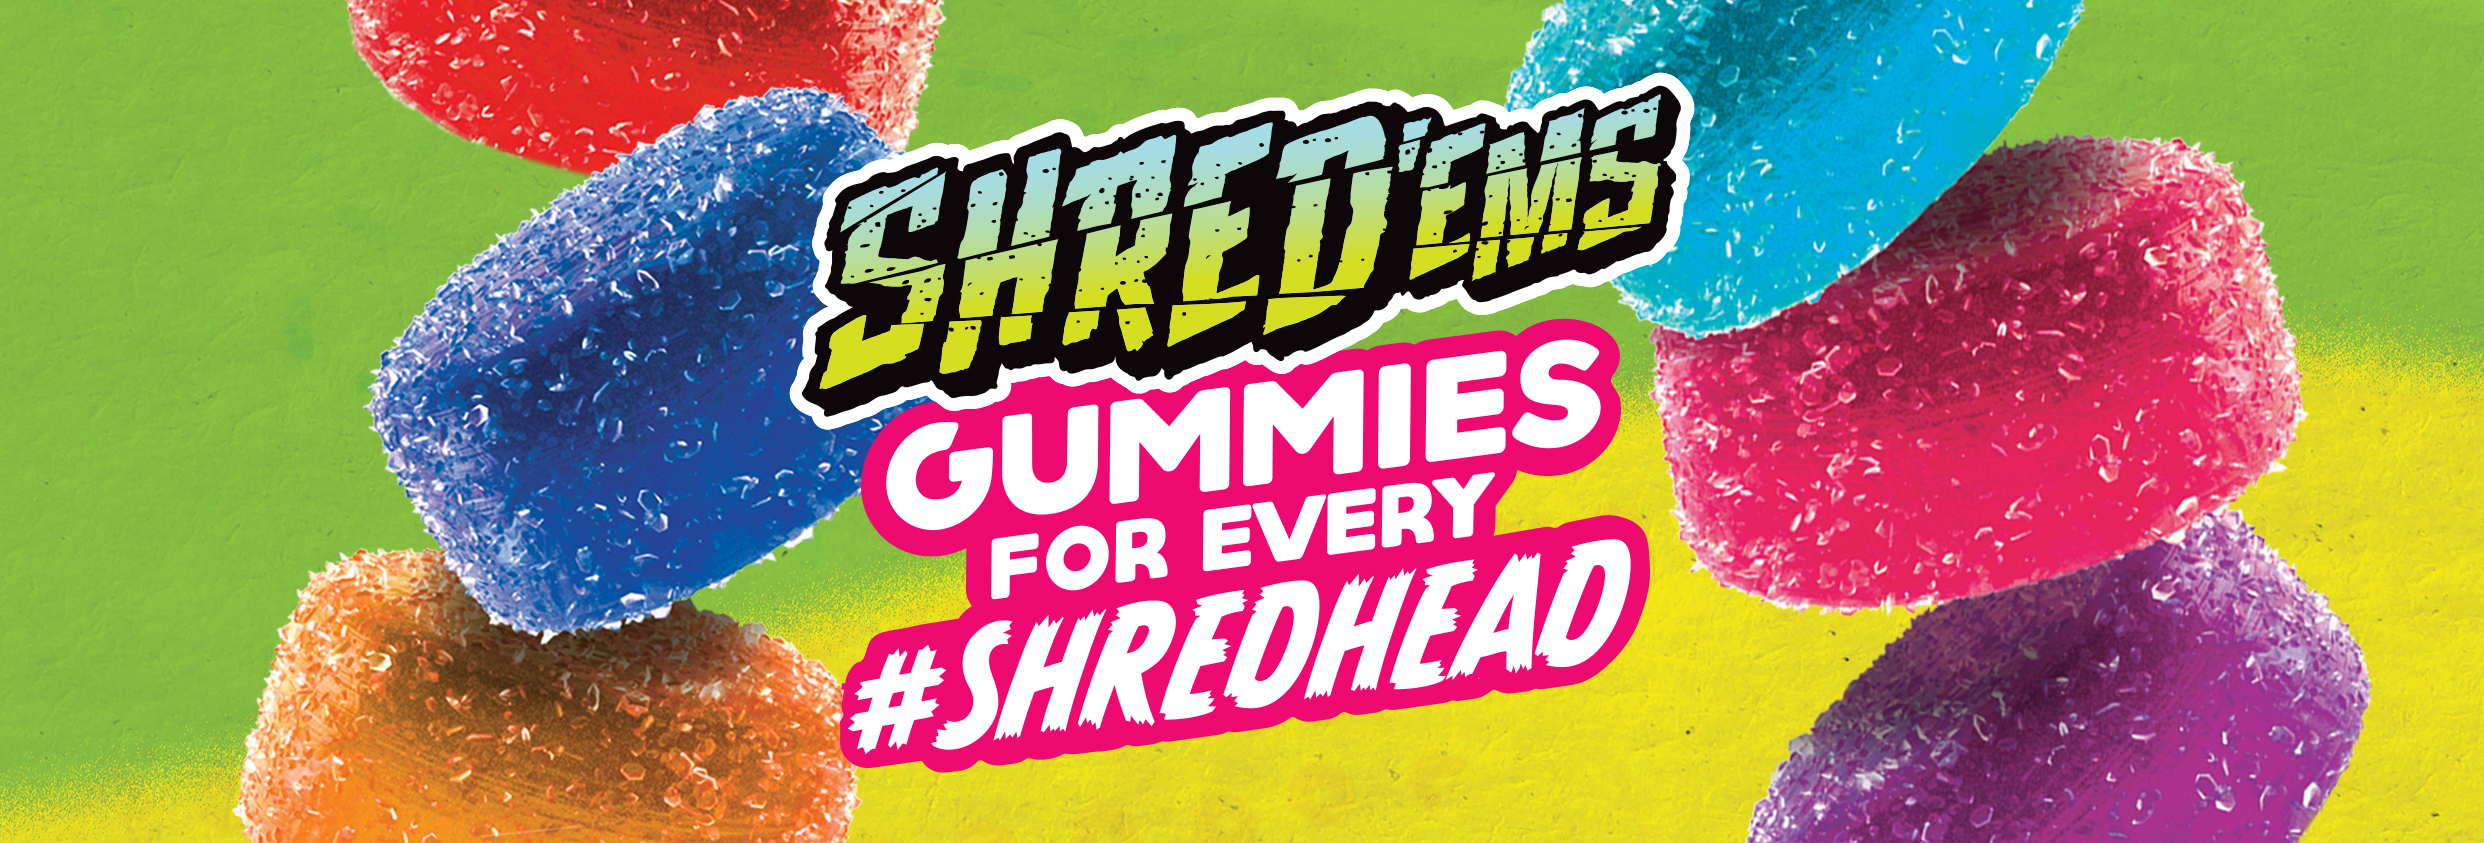 Shredems: gummies for every Shred Head.